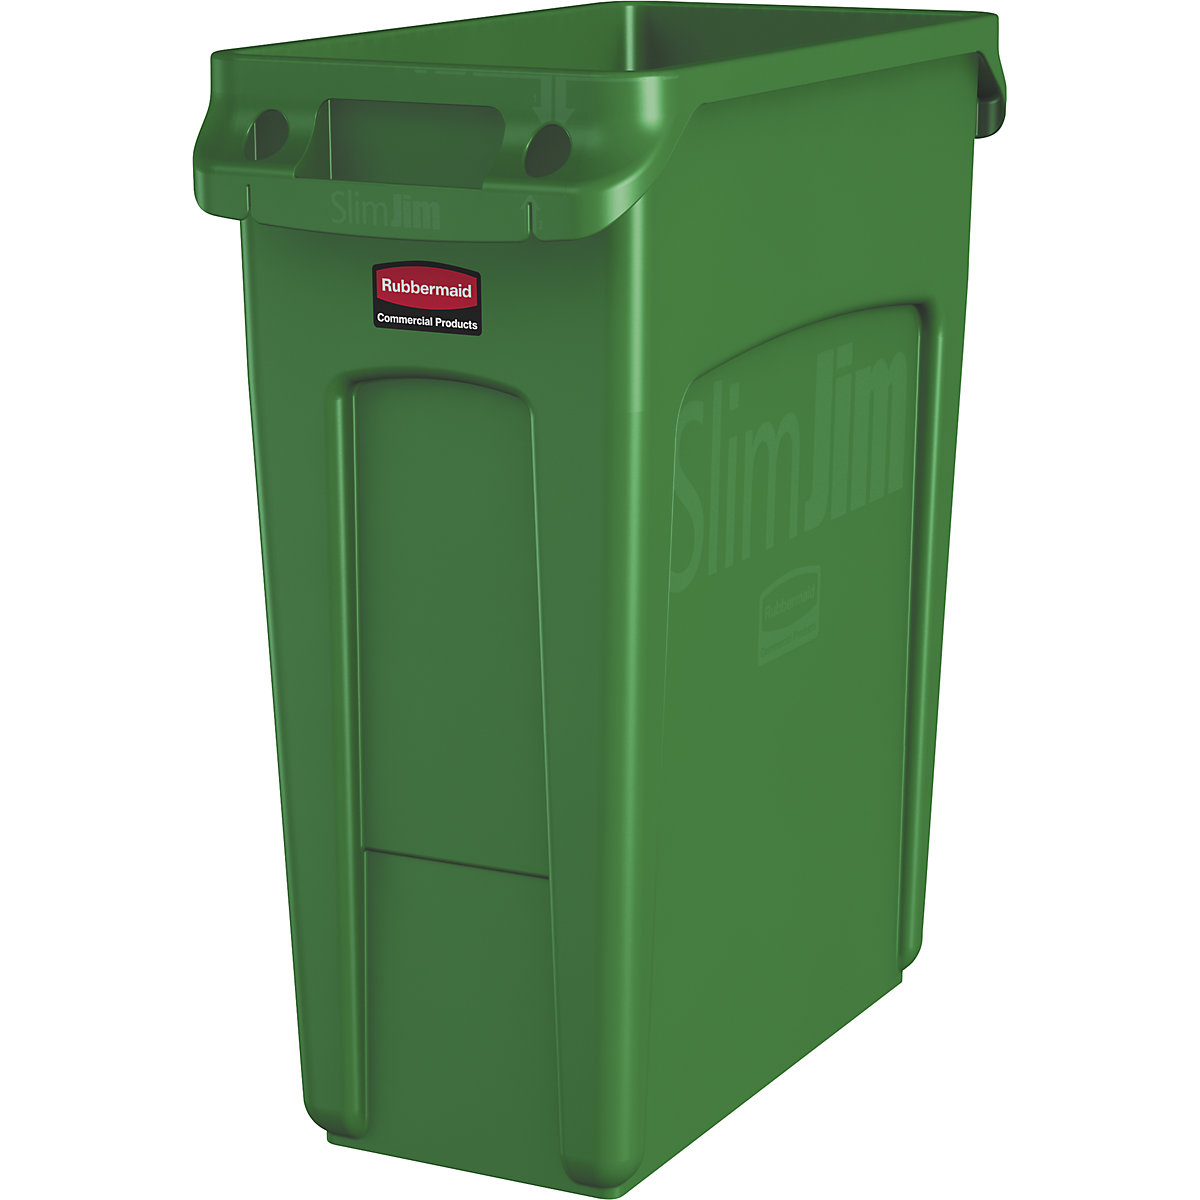 Spremnik za sirovine/kanta za otpad SLIM JIM® – Rubbermaid, volumen 60 l, s kanalima za ventilaciju, u zelenoj boji-12